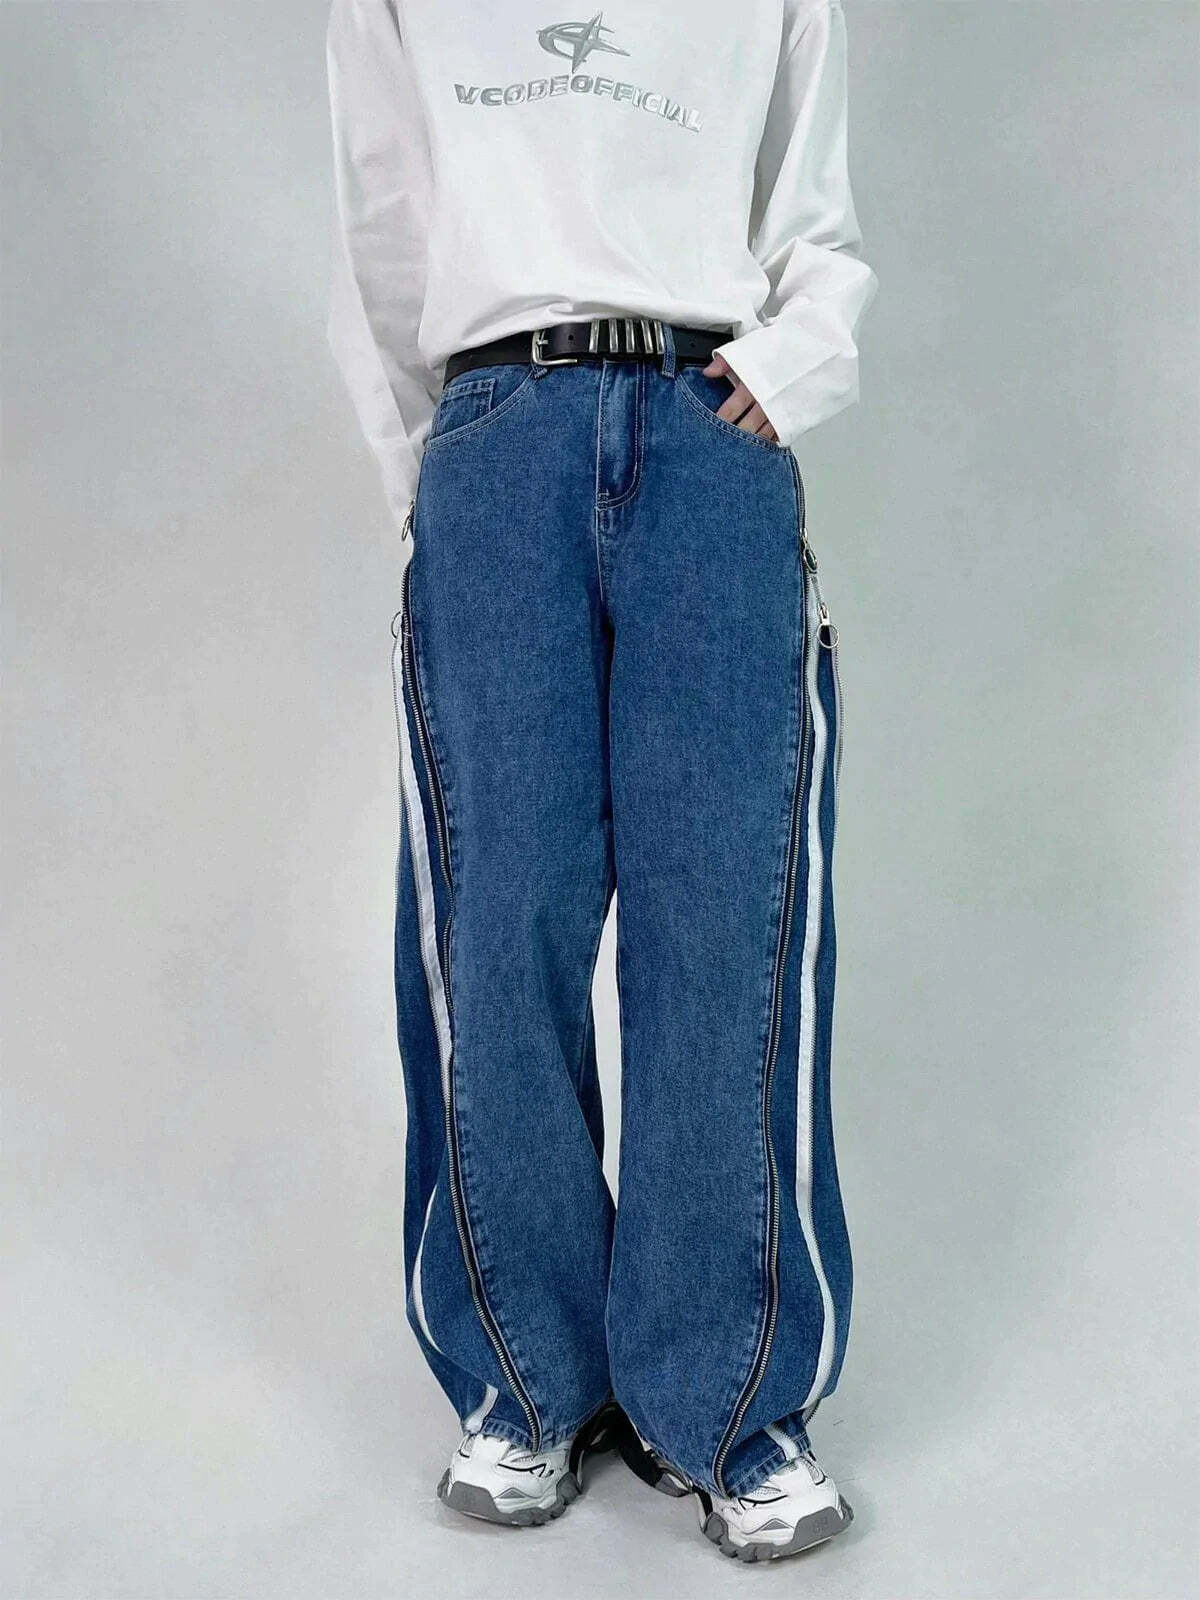 retro stripe zipup jeans edgy & vibrant streetwear 3984